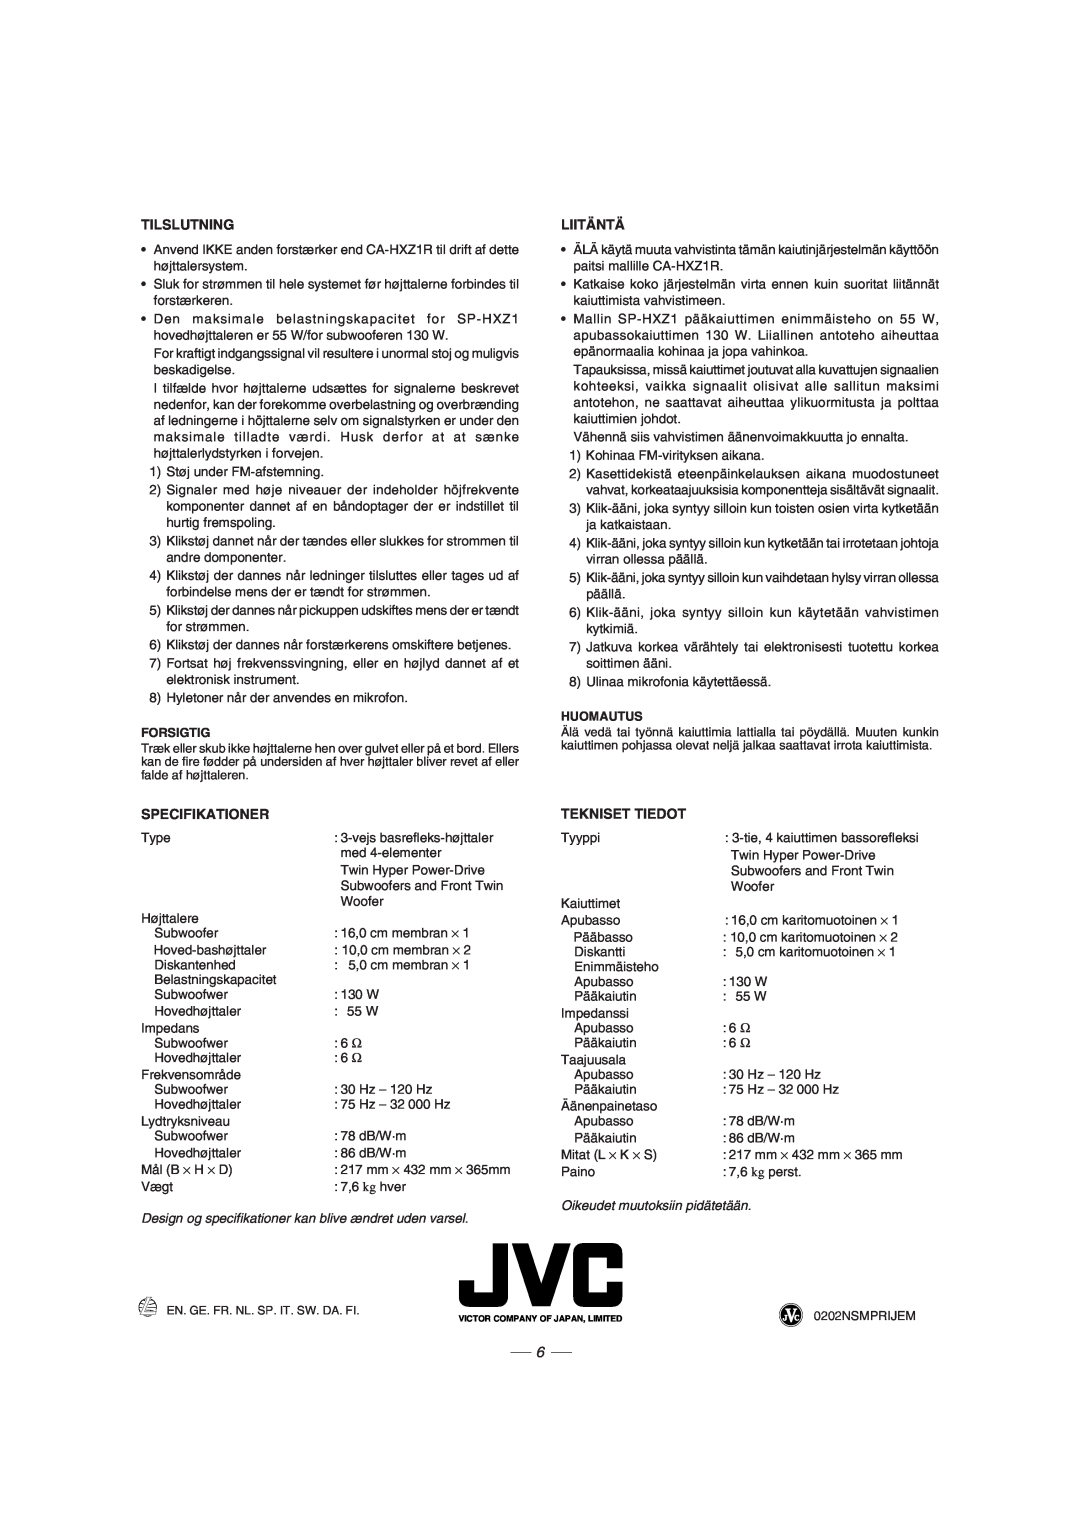 JVC GVT0077-008A manual Tilslutning, Liitäntä, Specifikationer, Tekniset Tiedot 